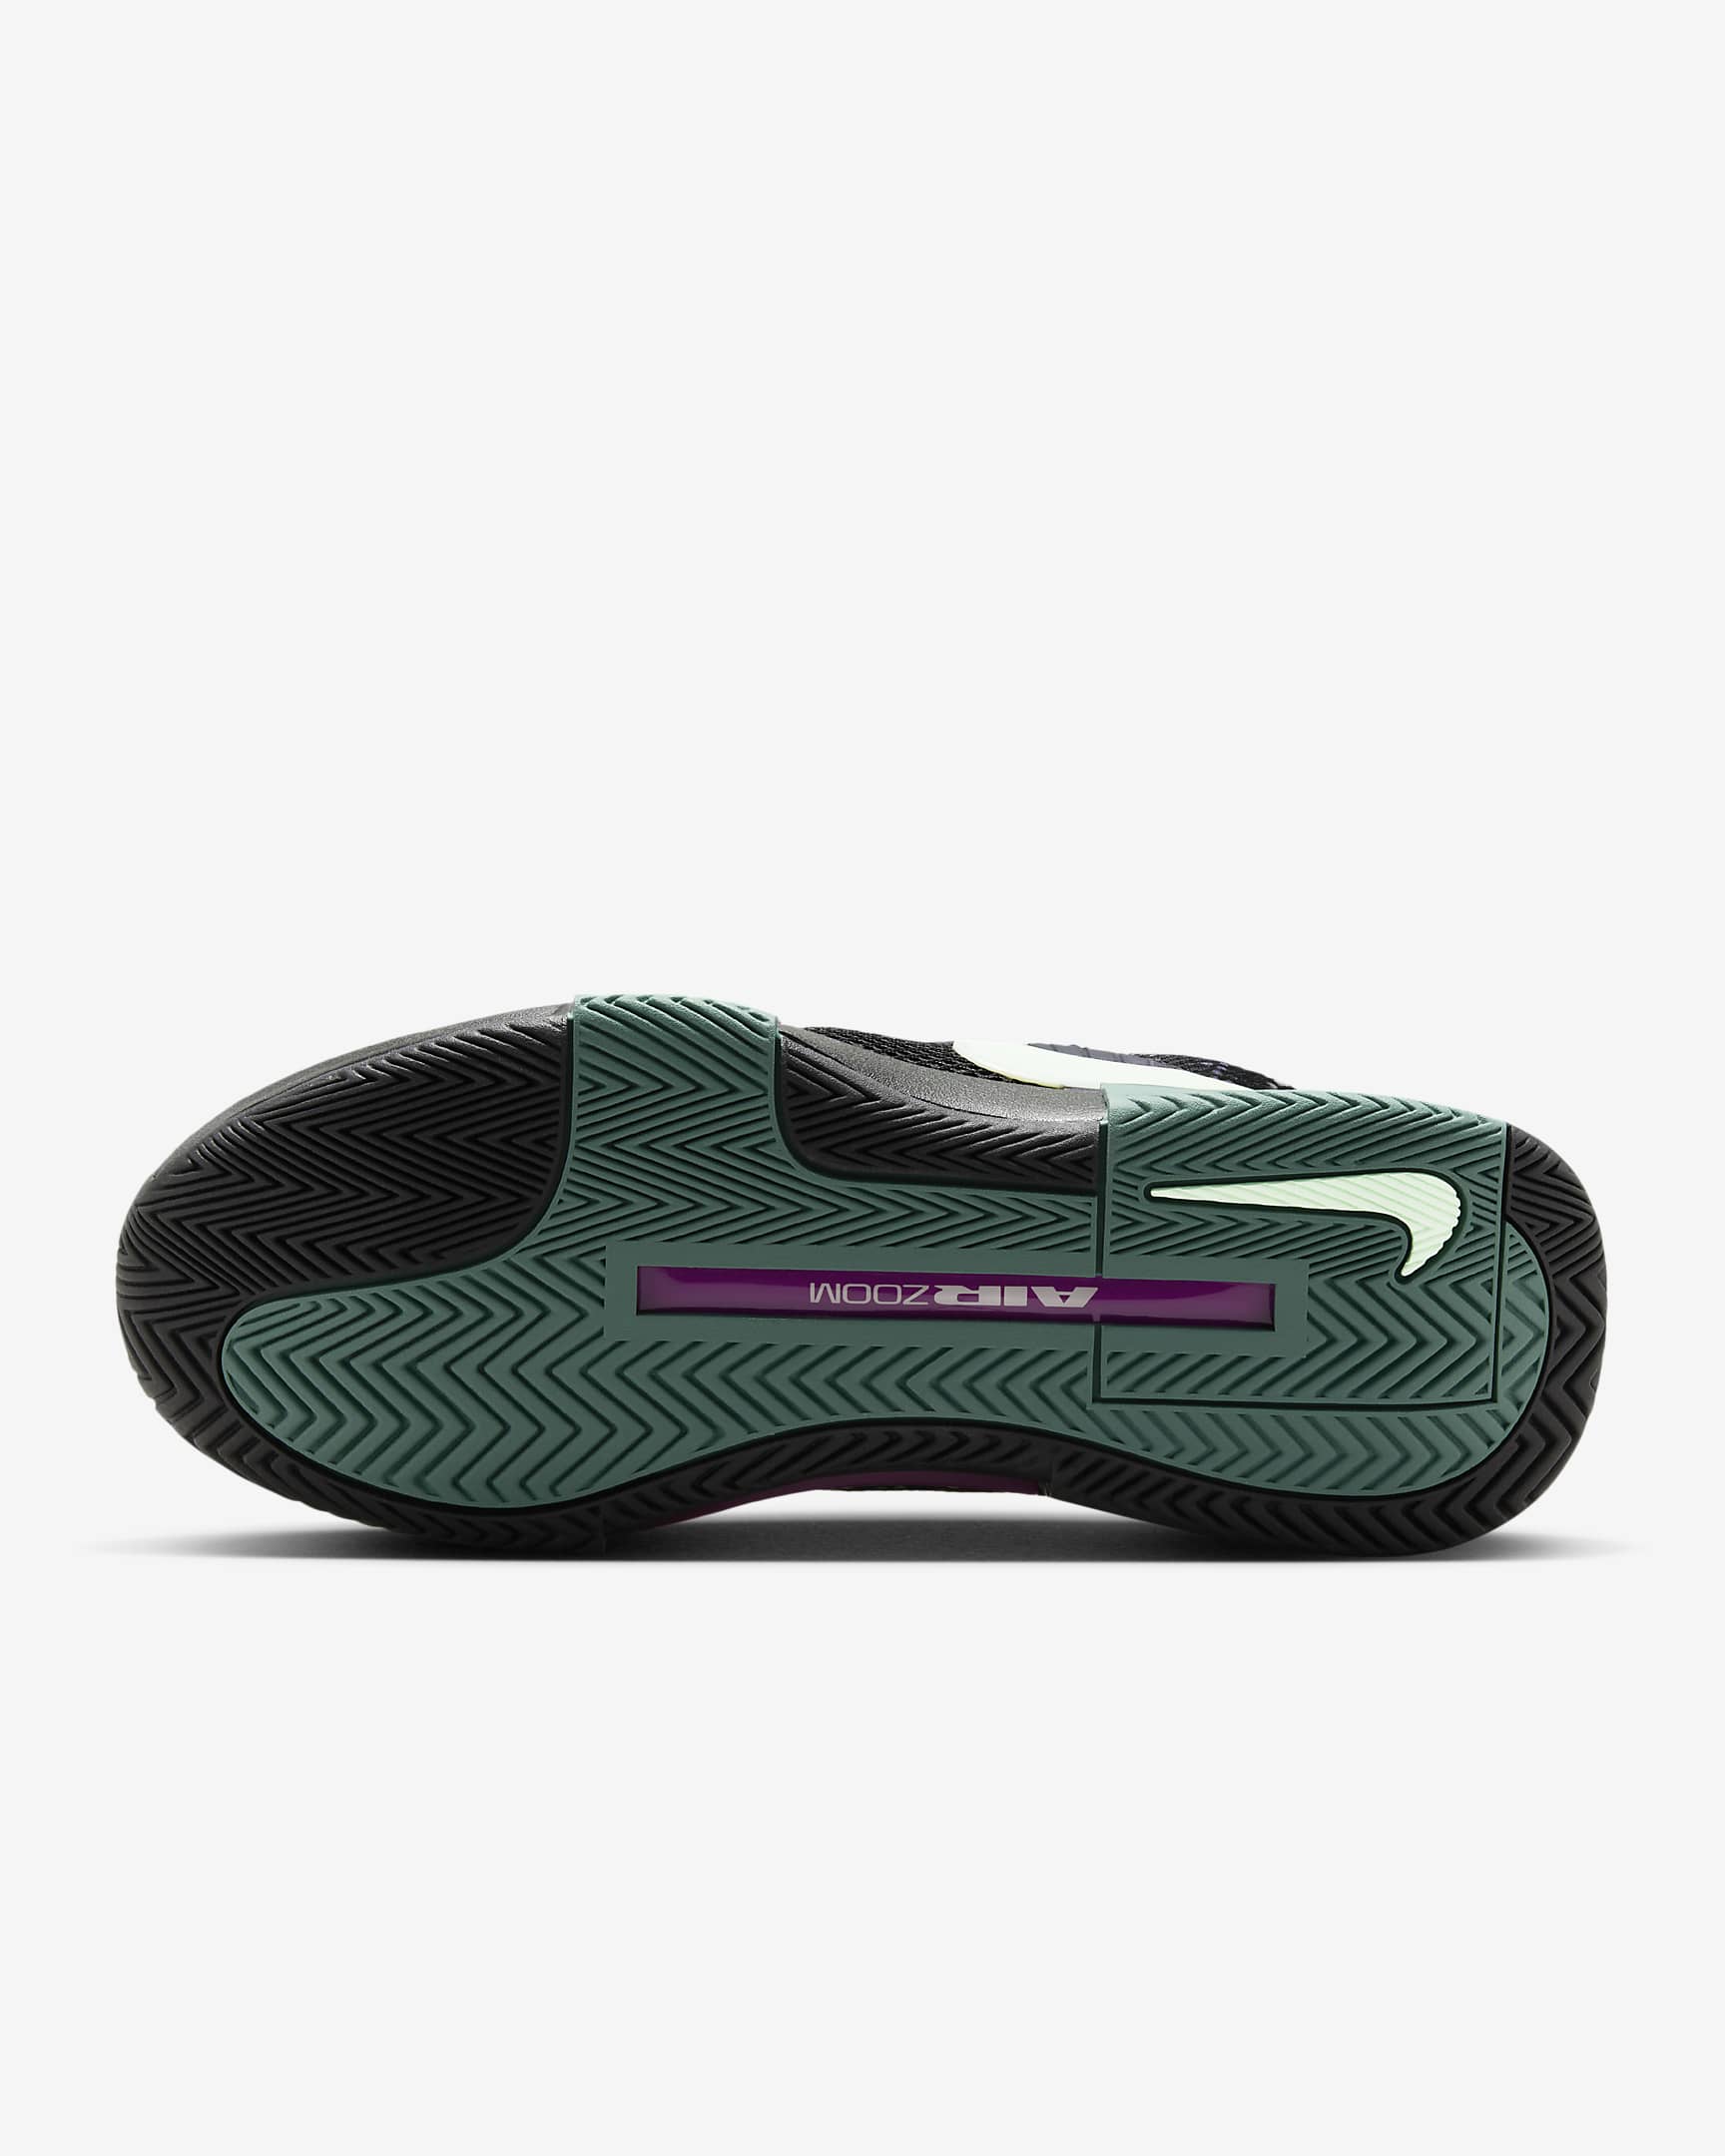 Nike GP Challenge 1 "Osaka" Women's Hard Court Tennis Shoes - Black/Multi-Color/Bicoastal/Vapor Green